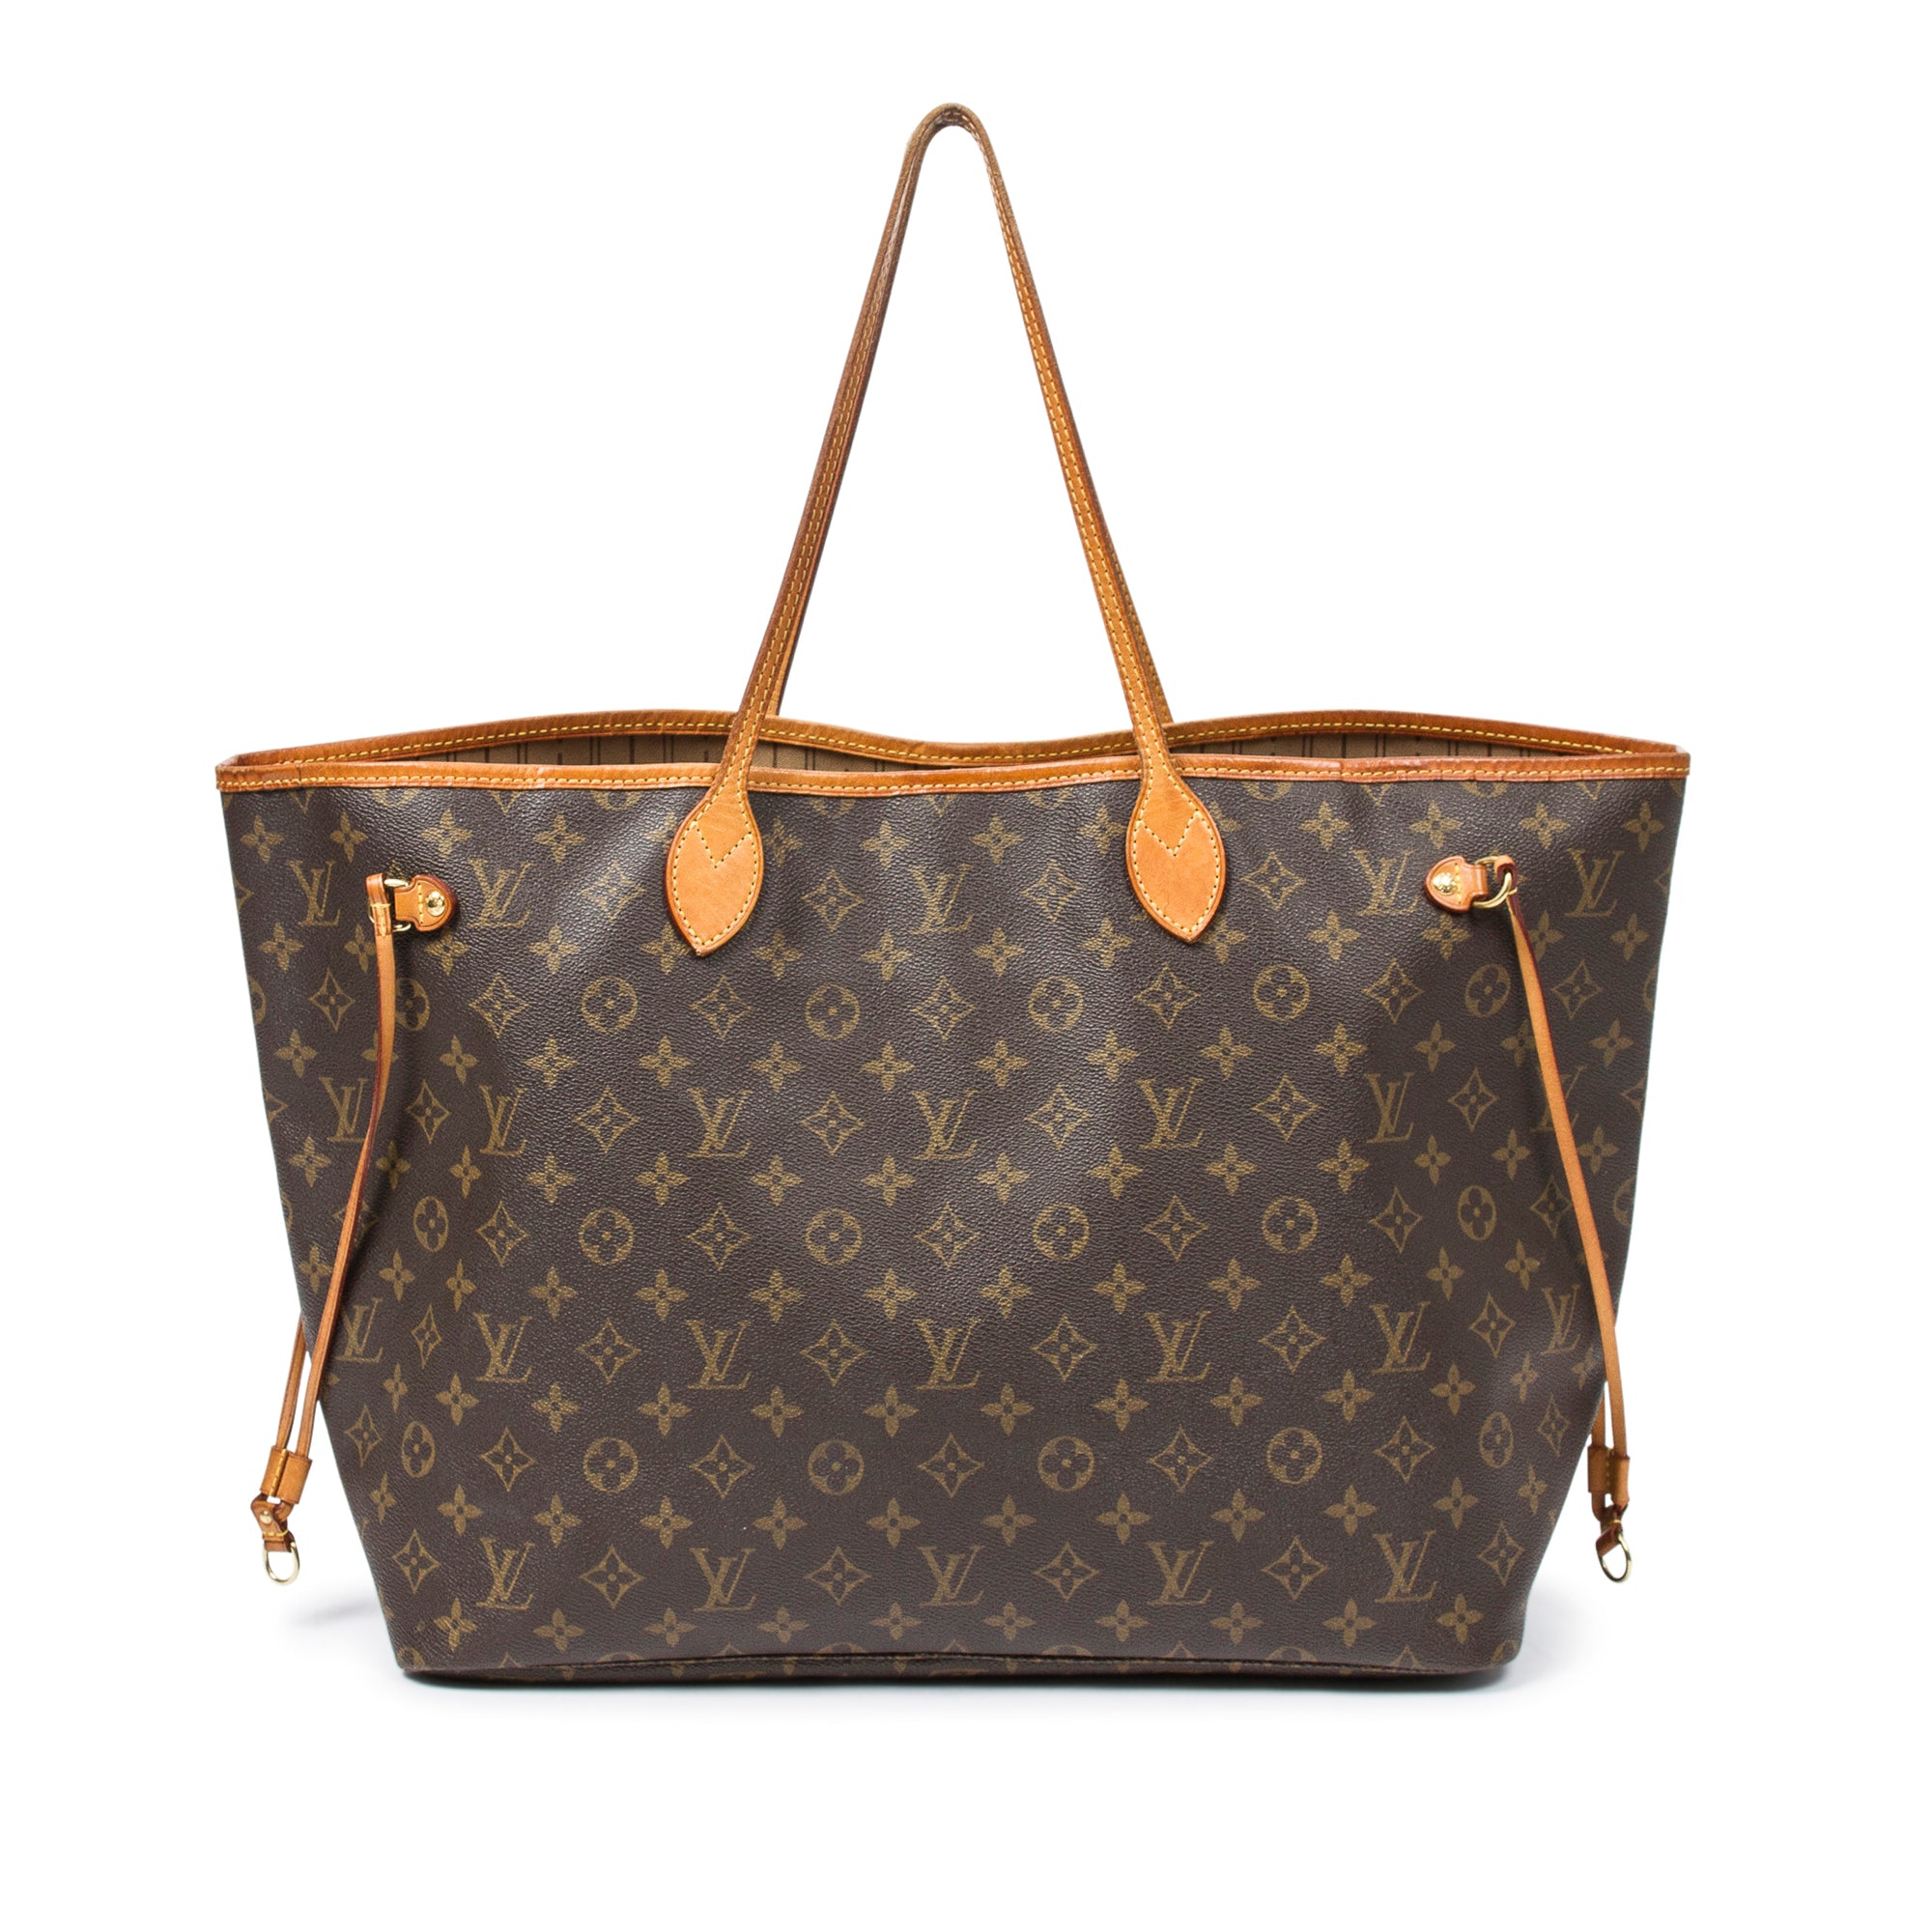 Louis Vuitton Tote Bag W/ Monogram Design